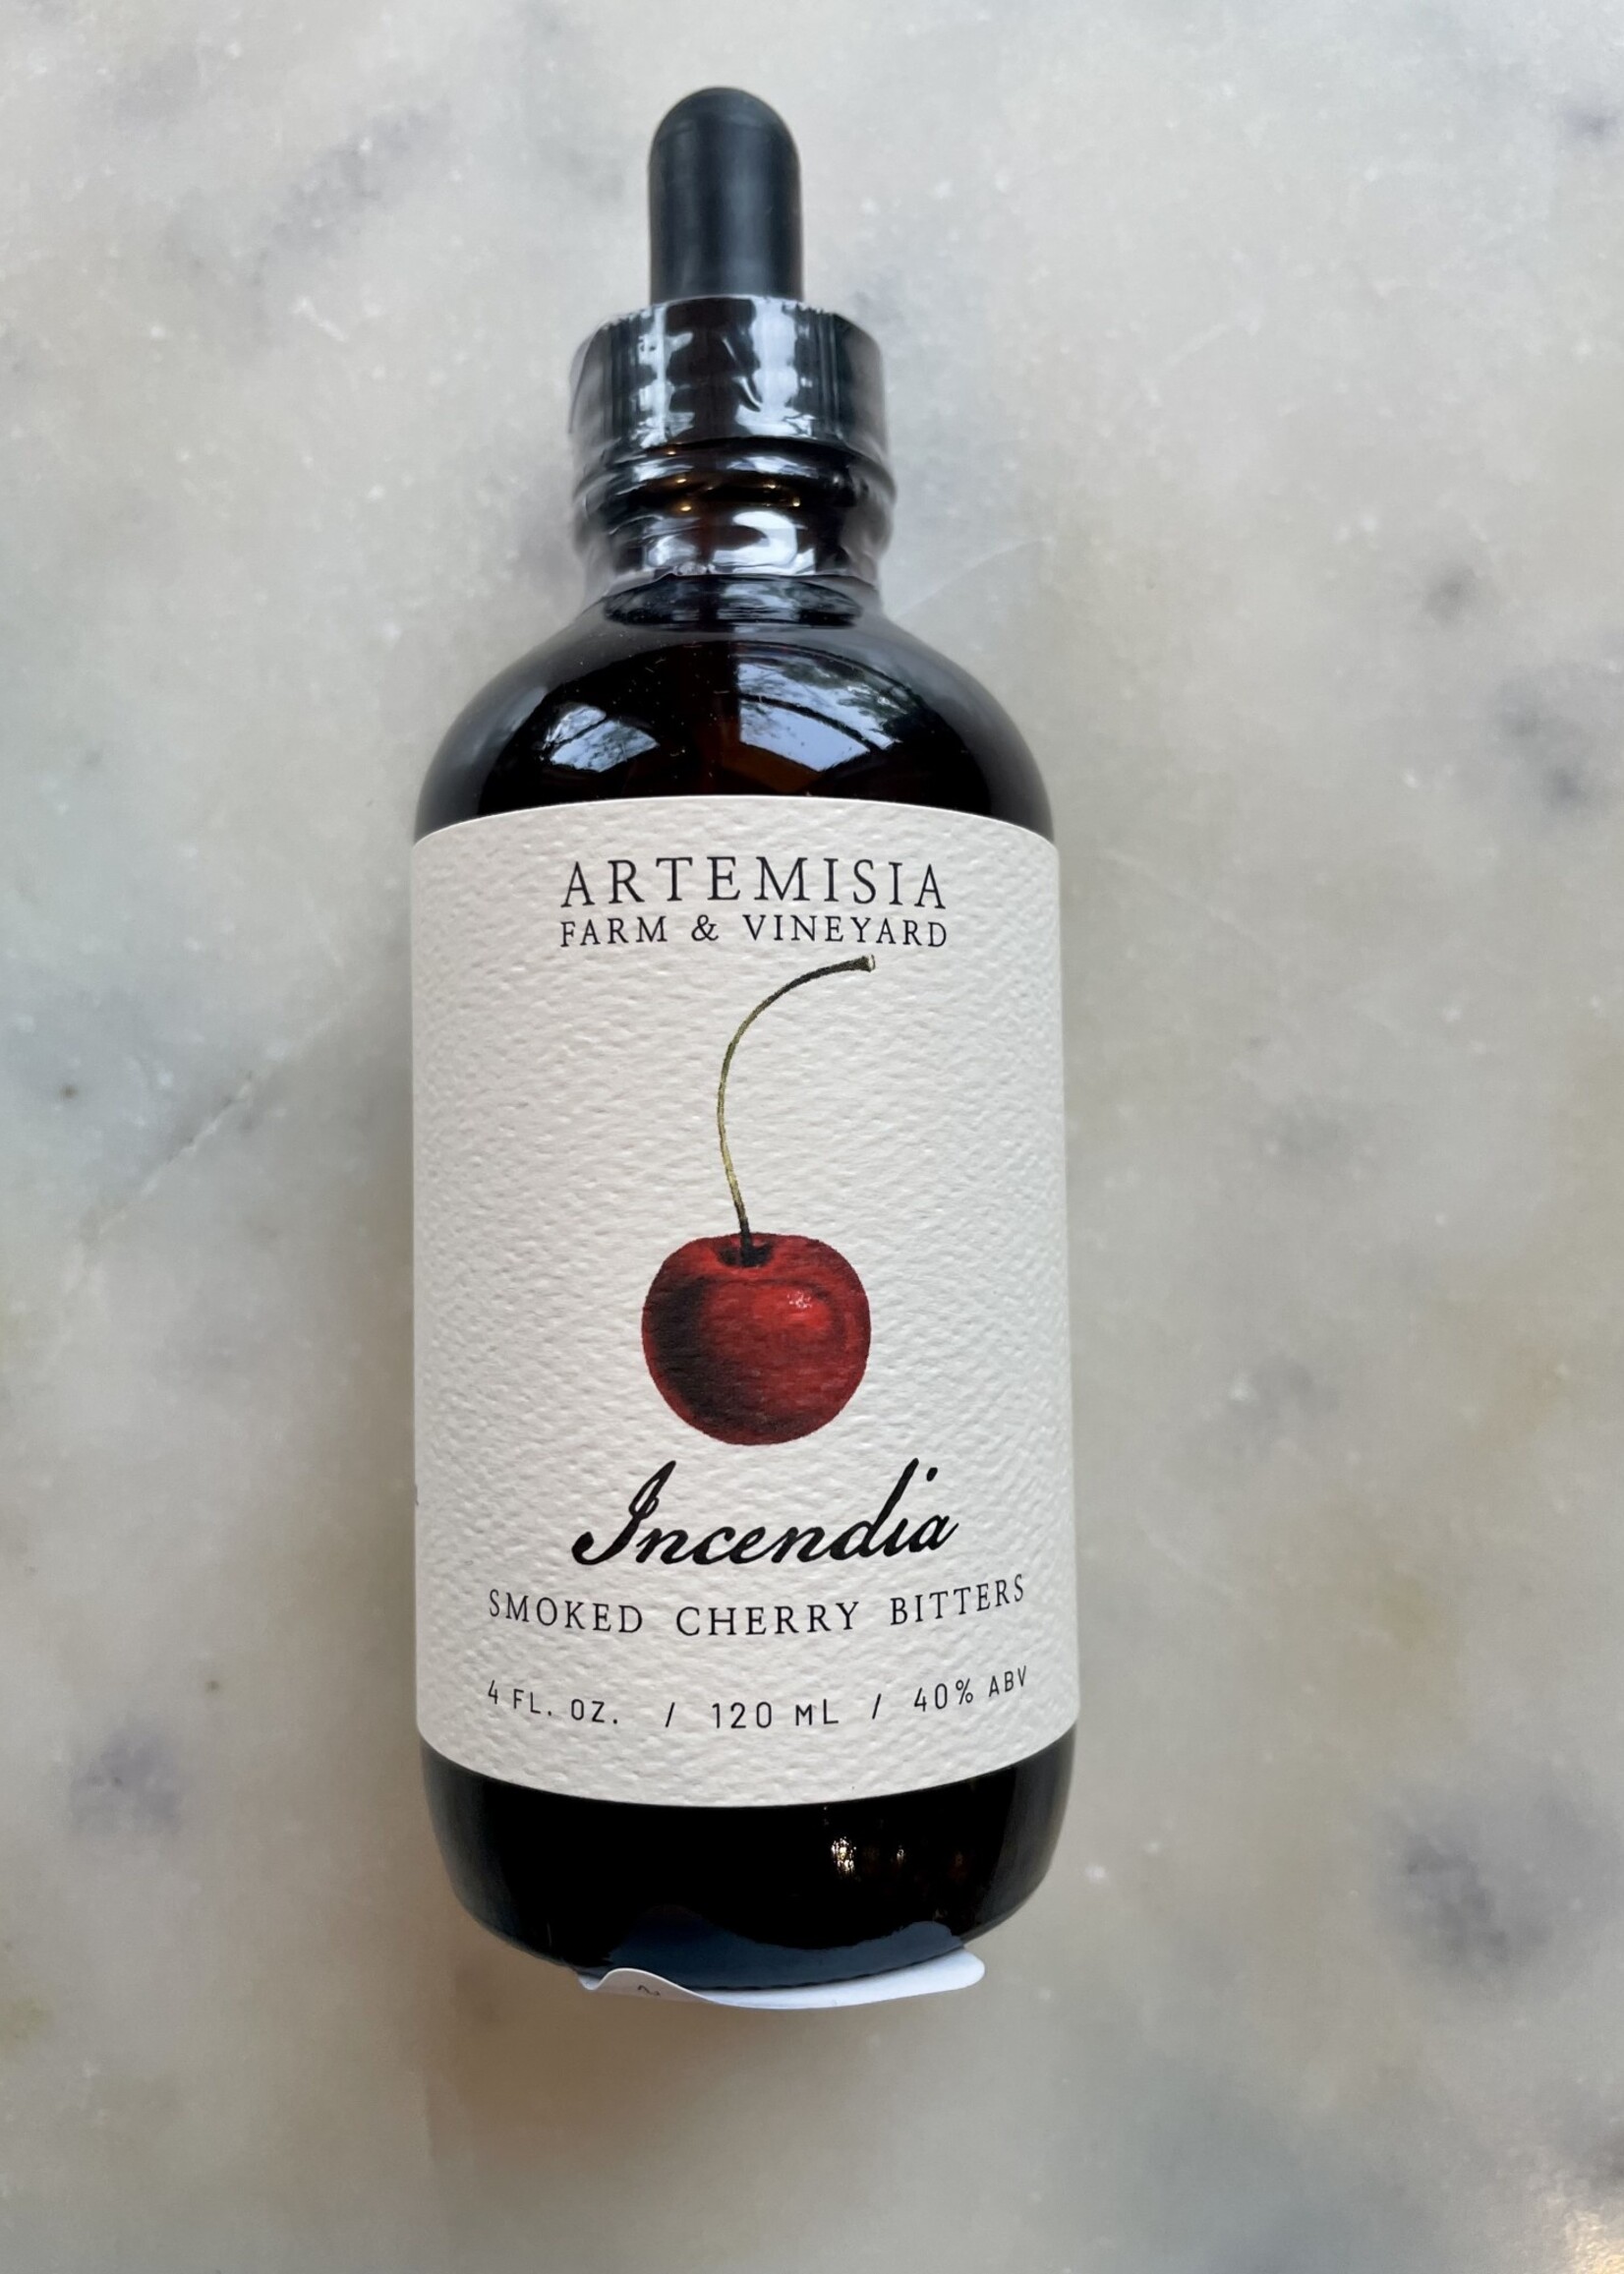 Artemisia Farm & Vineyard, Incendia Smoked Cherry  Bitters  4fl. oz. (120ml)